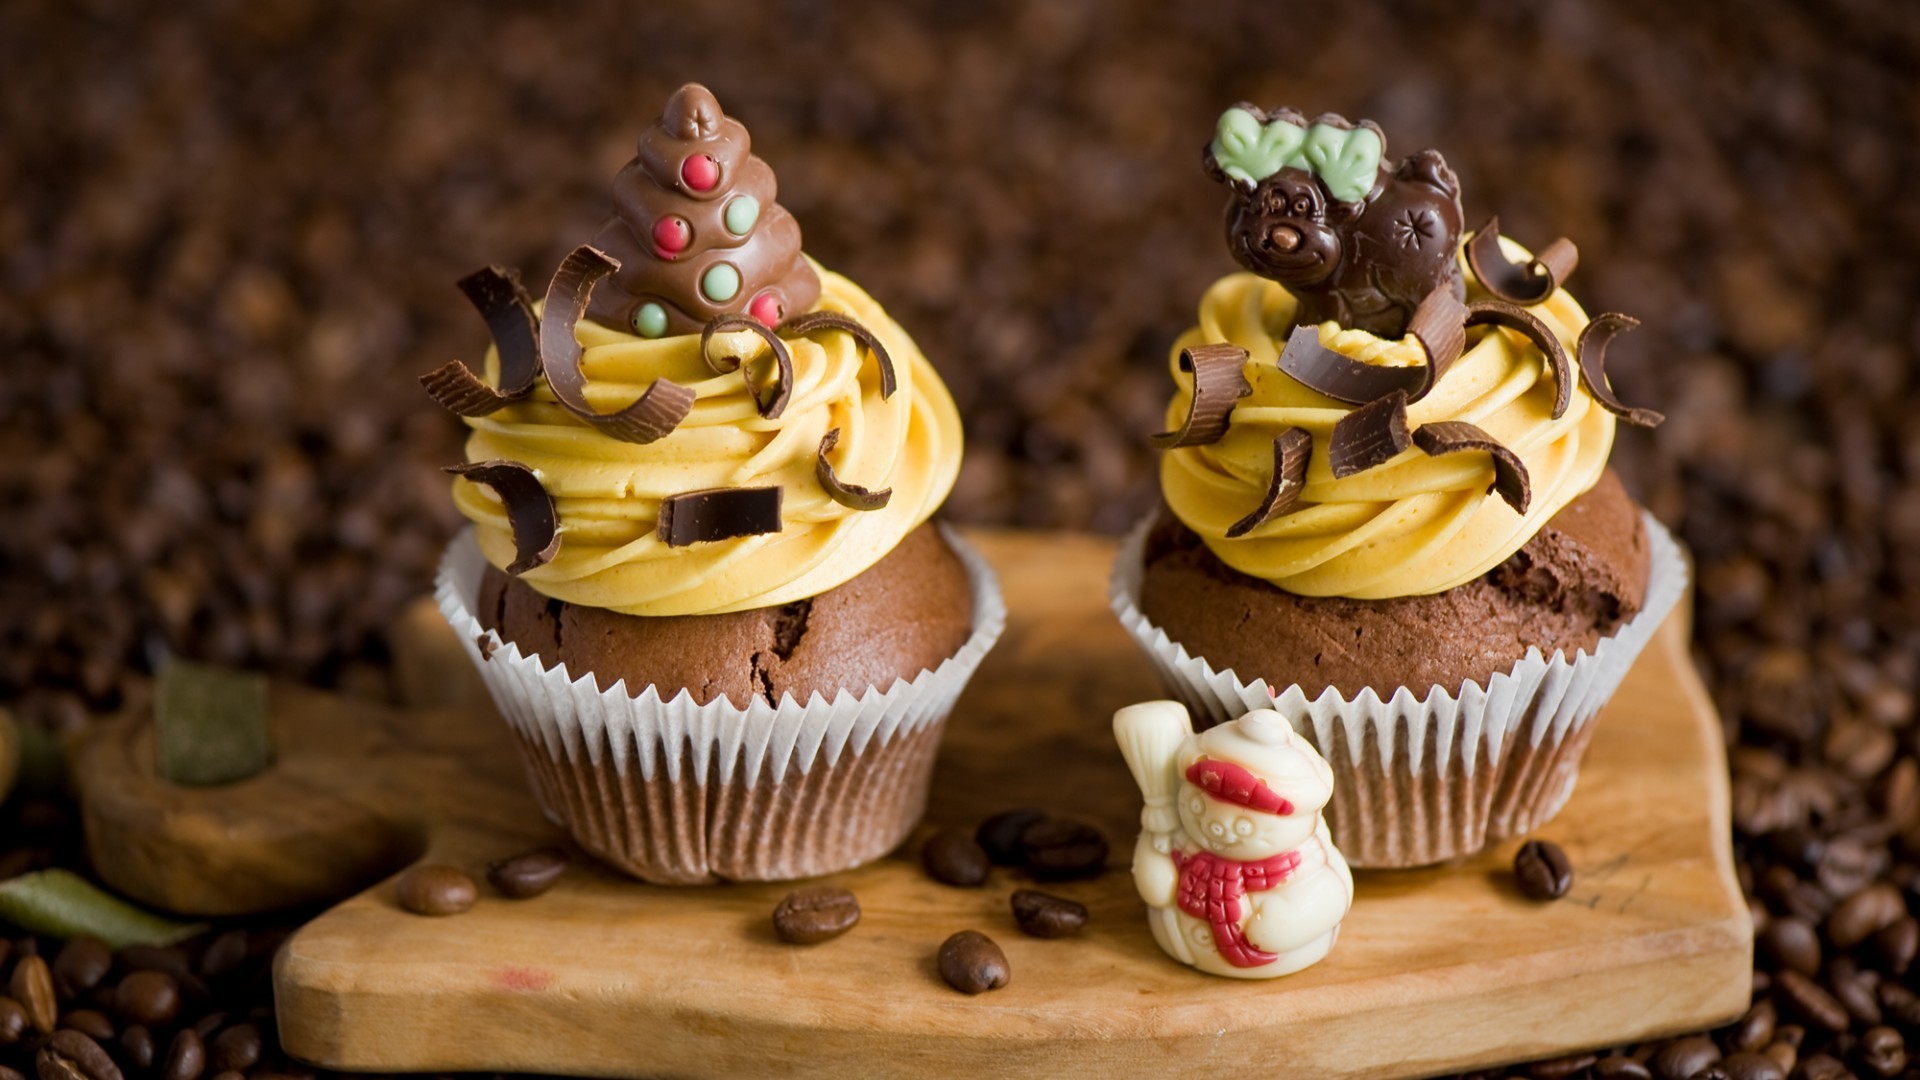 Wallpaper, food, cake, cupcakes, chocolate, dessert, icing, sweetness, produce, flavor, cupcake, buttercream 1920x1080